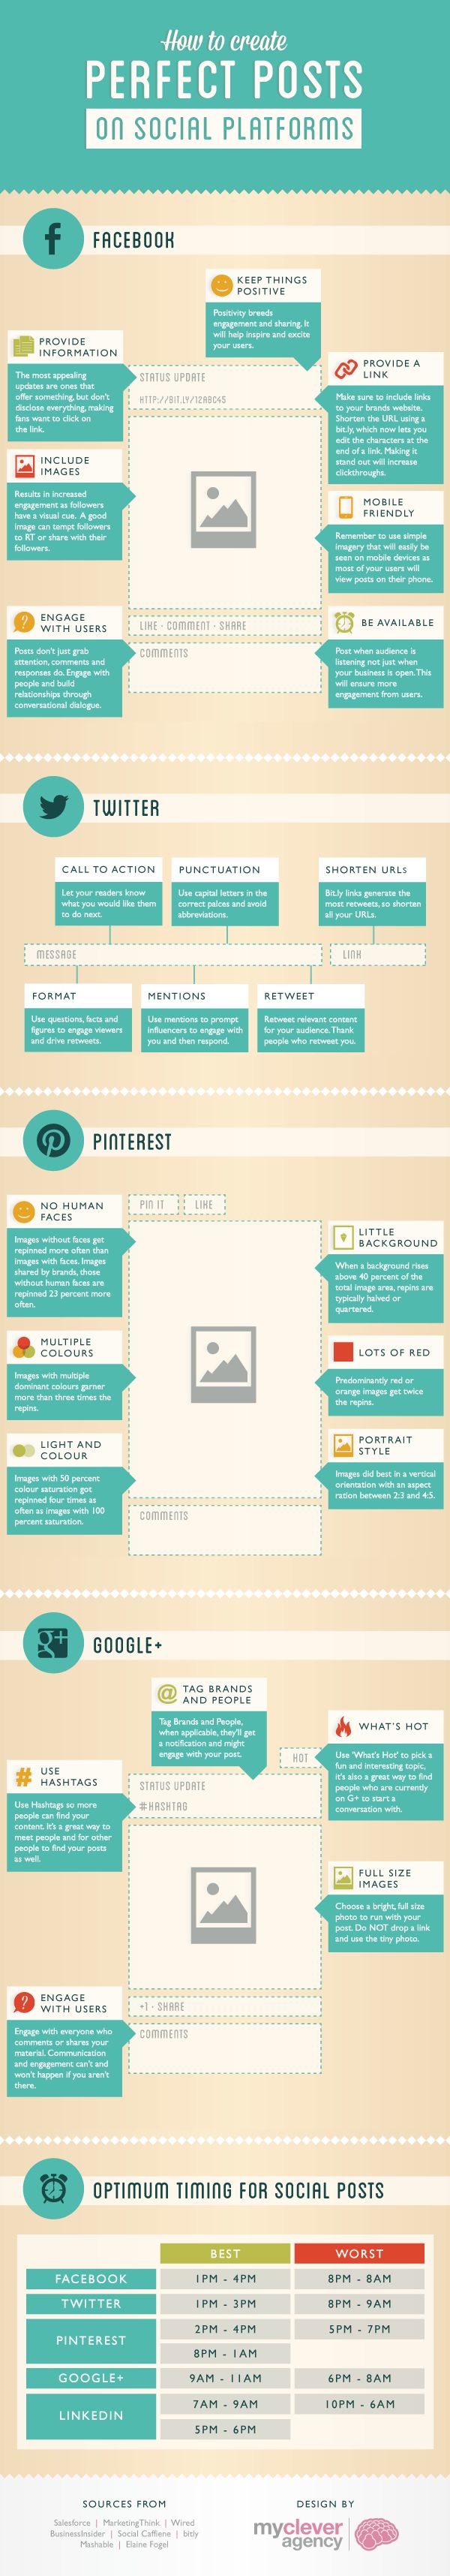 social media tips infographic